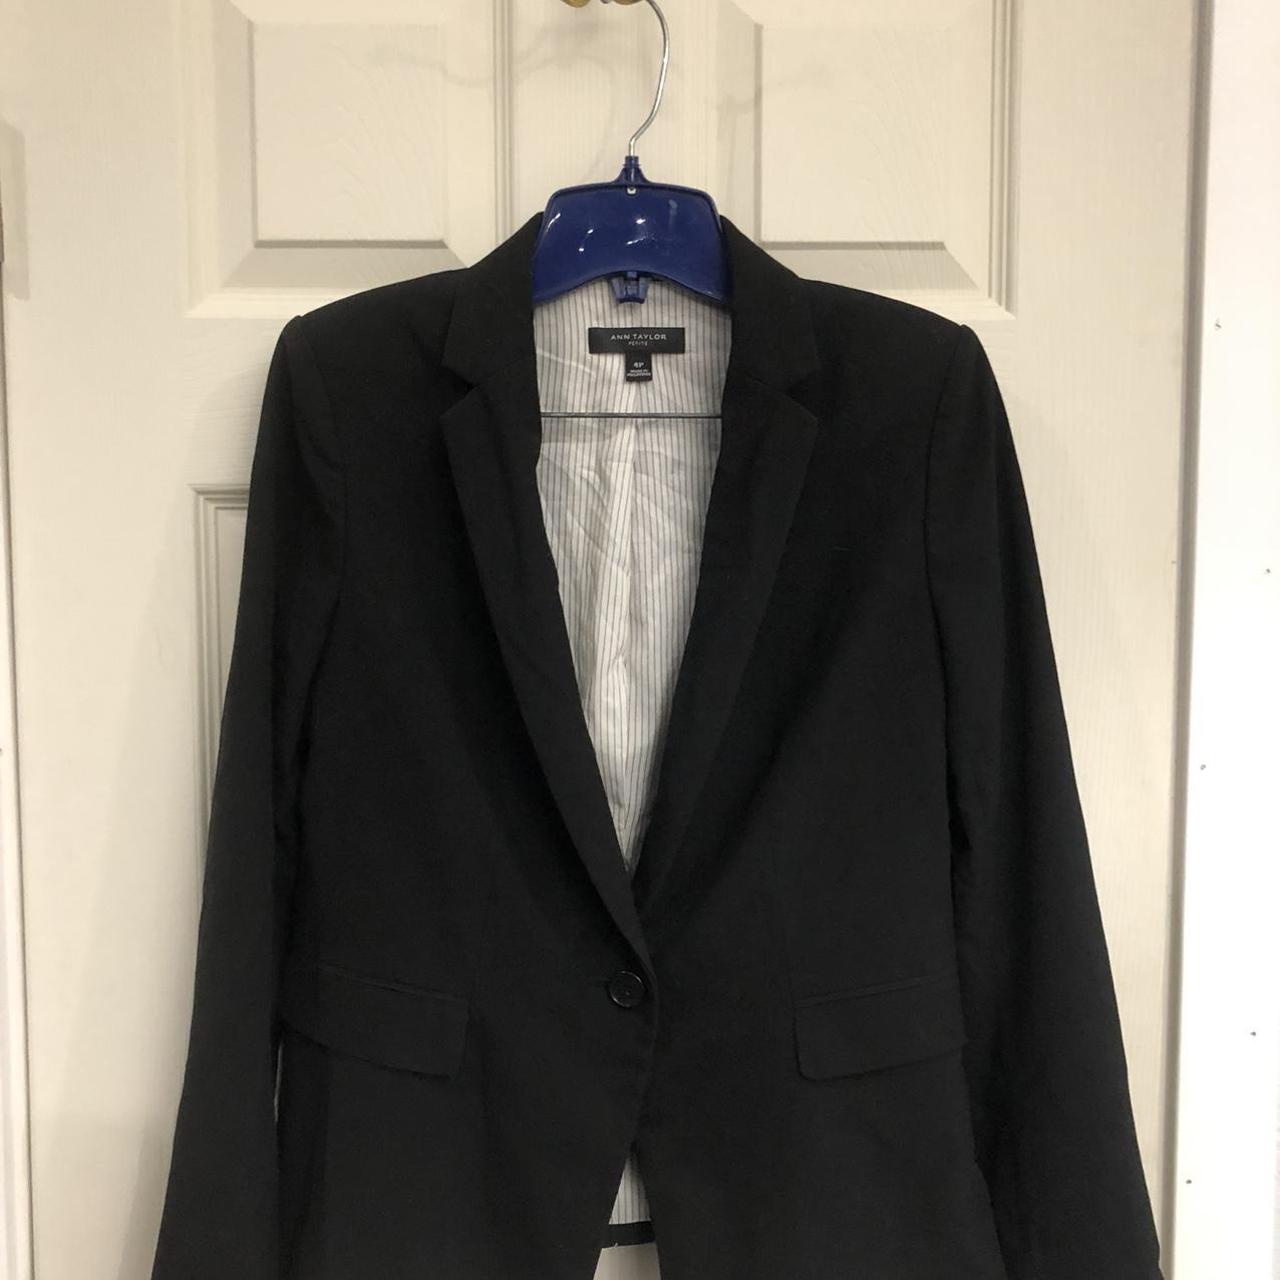 Blazer suit jacket - Depop